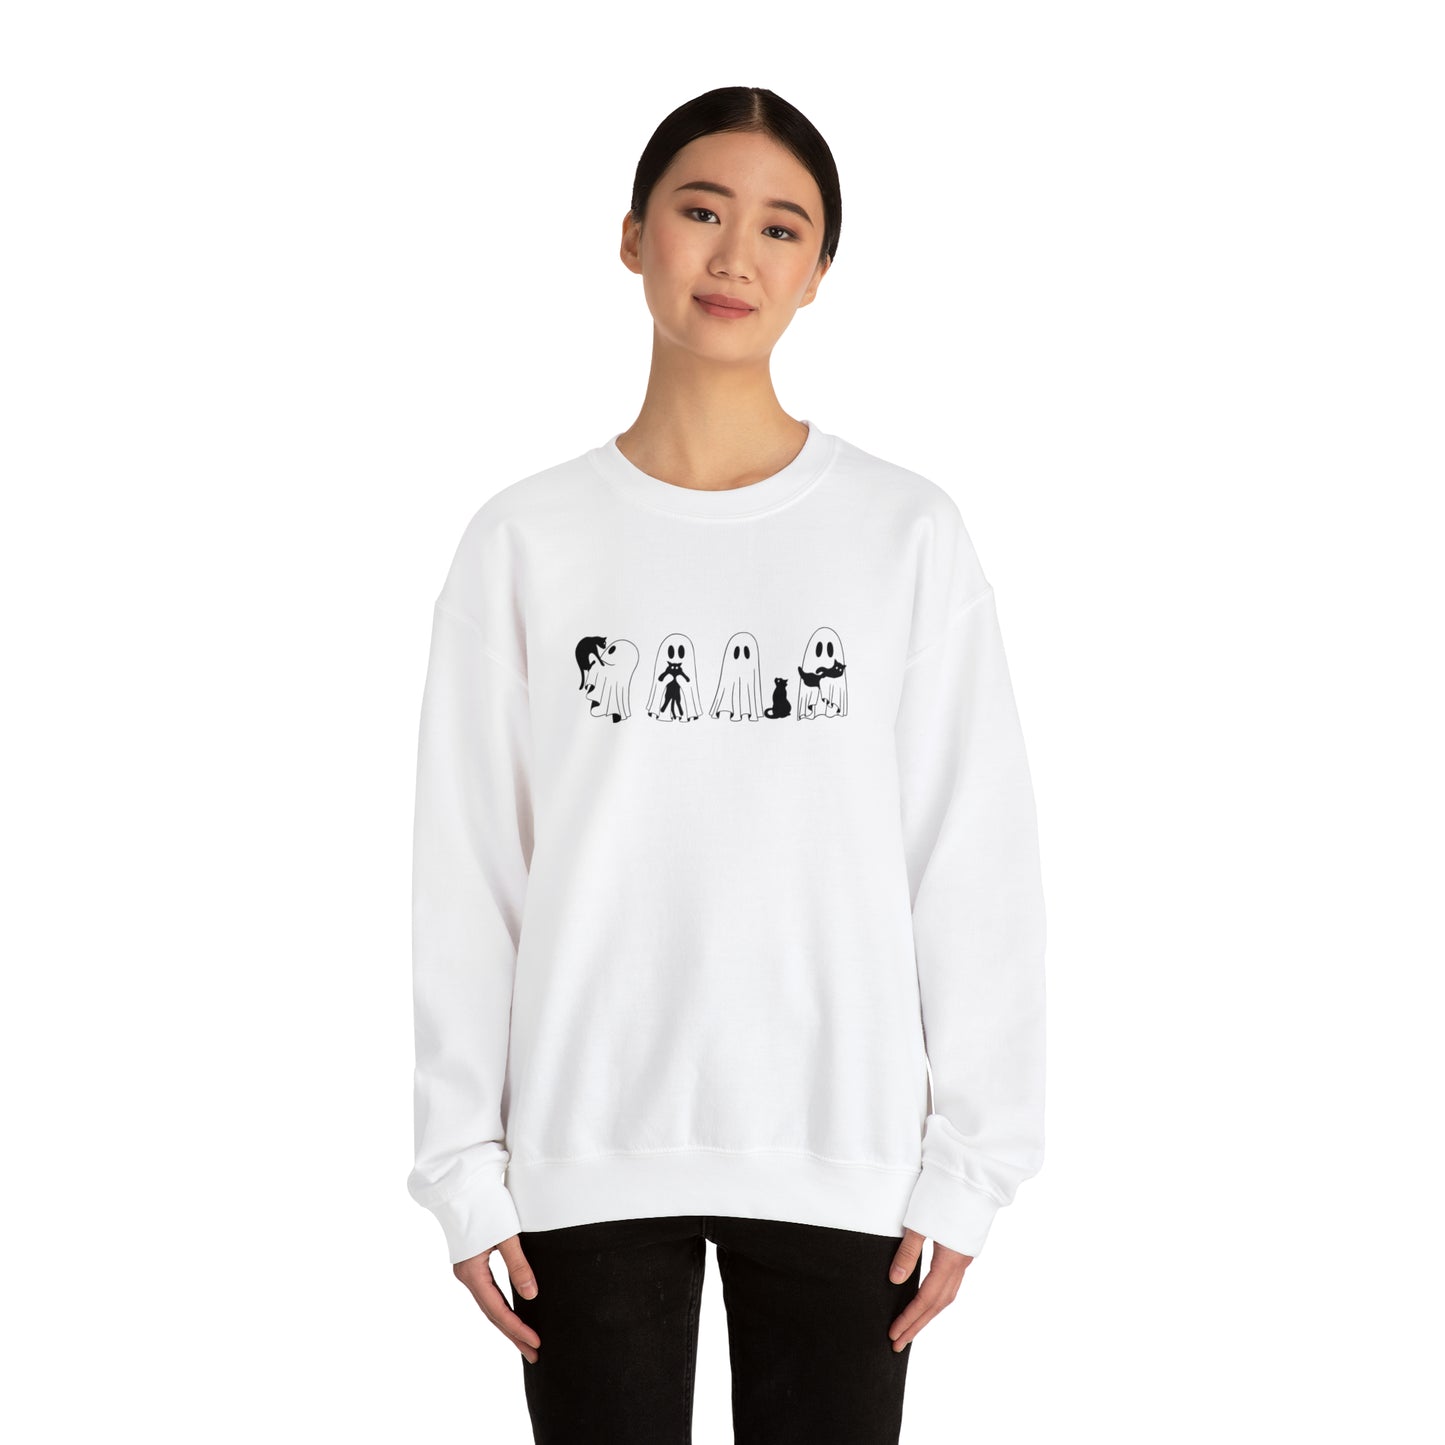 Ghost Holding Black Cat Sweatshirt, Halloween Shirt, Ghost Shirt, Spooky Season, Cute Fall Shirt for Women, Halloween Sweatshirt, Cat Shirt